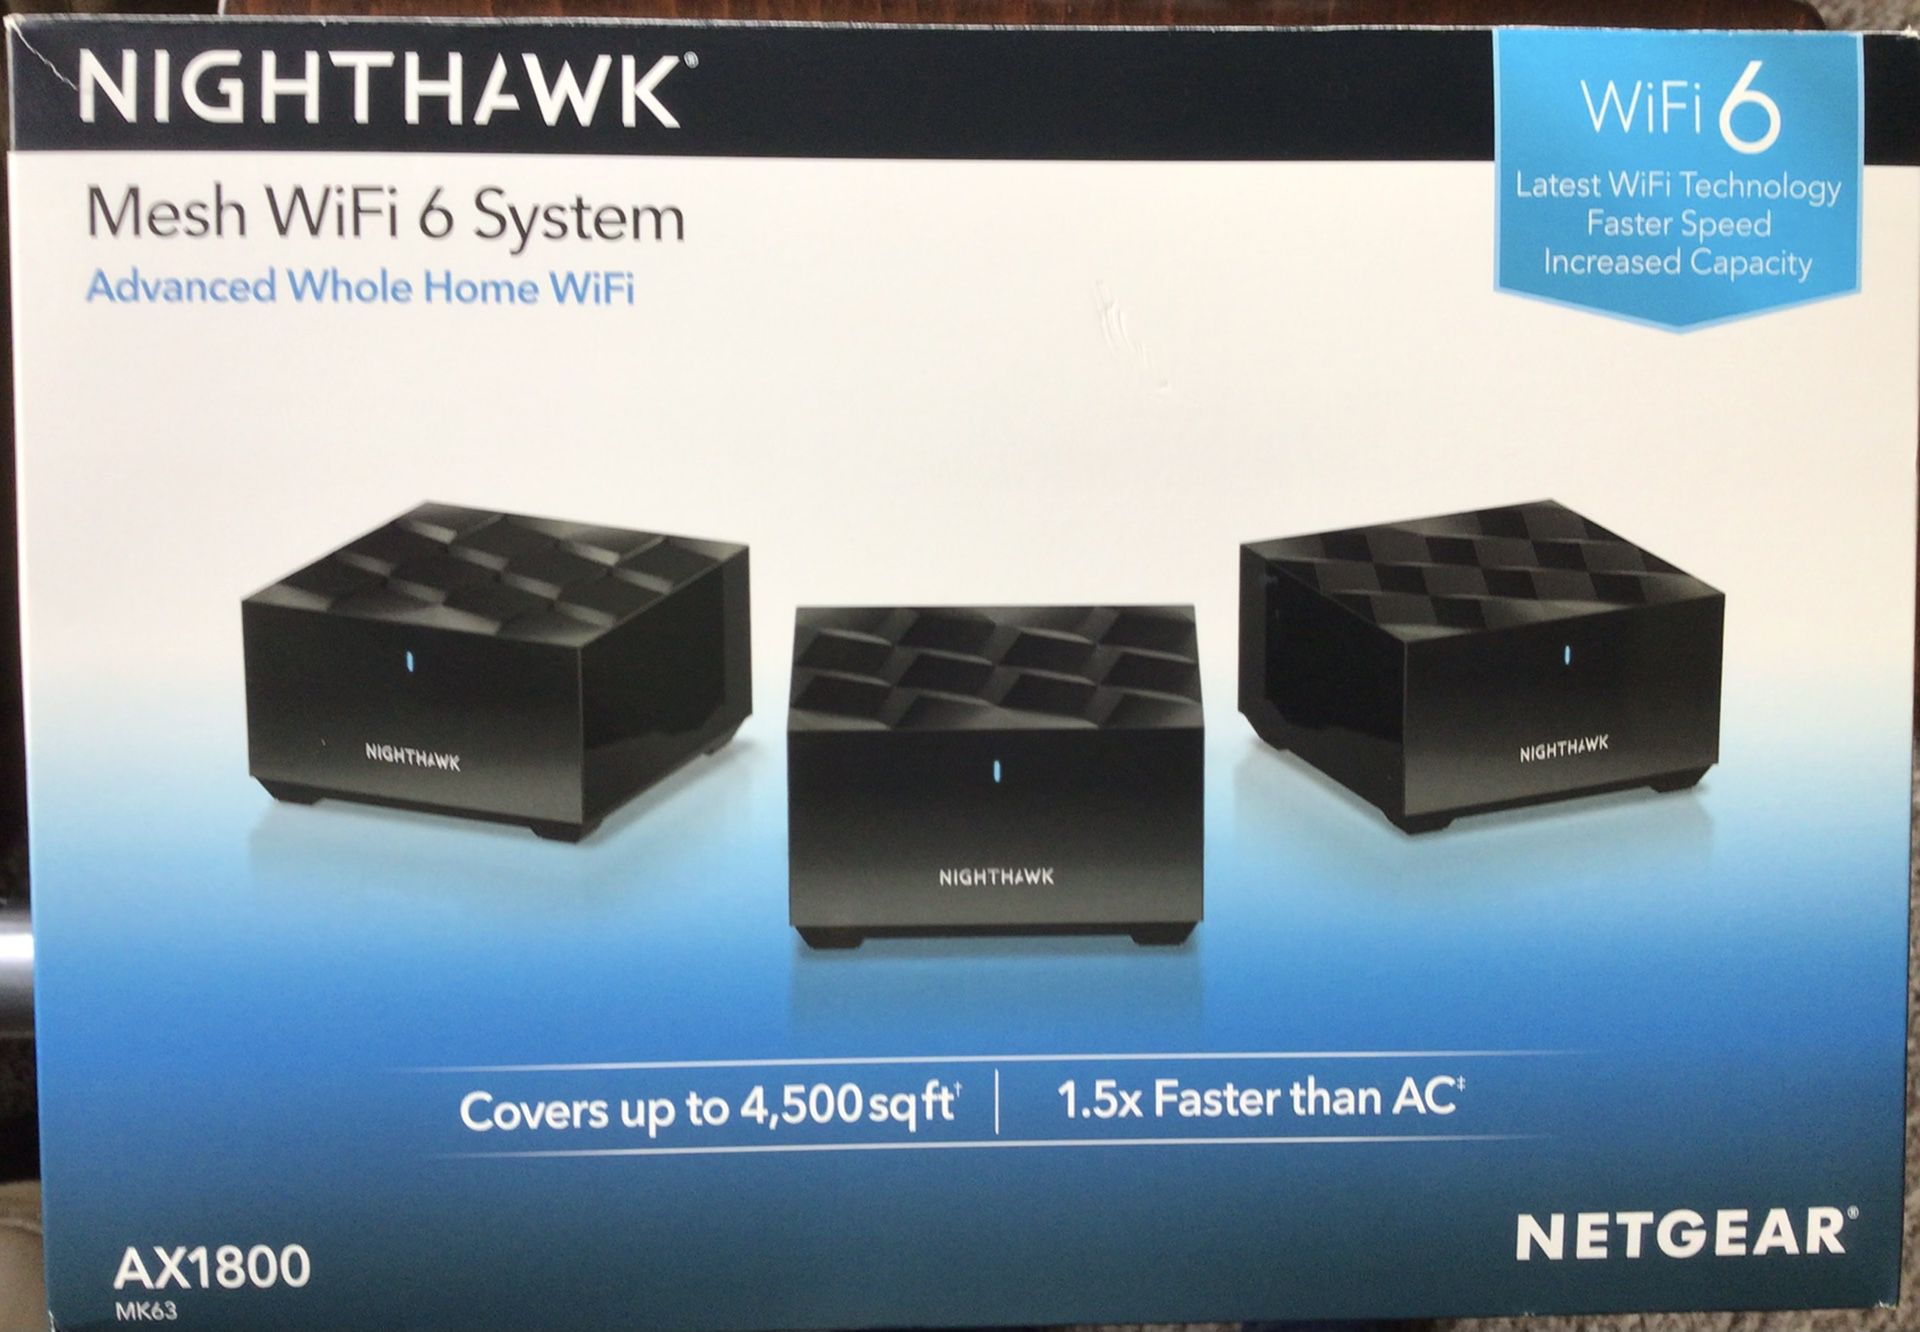 Net gear Nighthawk Mesh WiFi 6 System